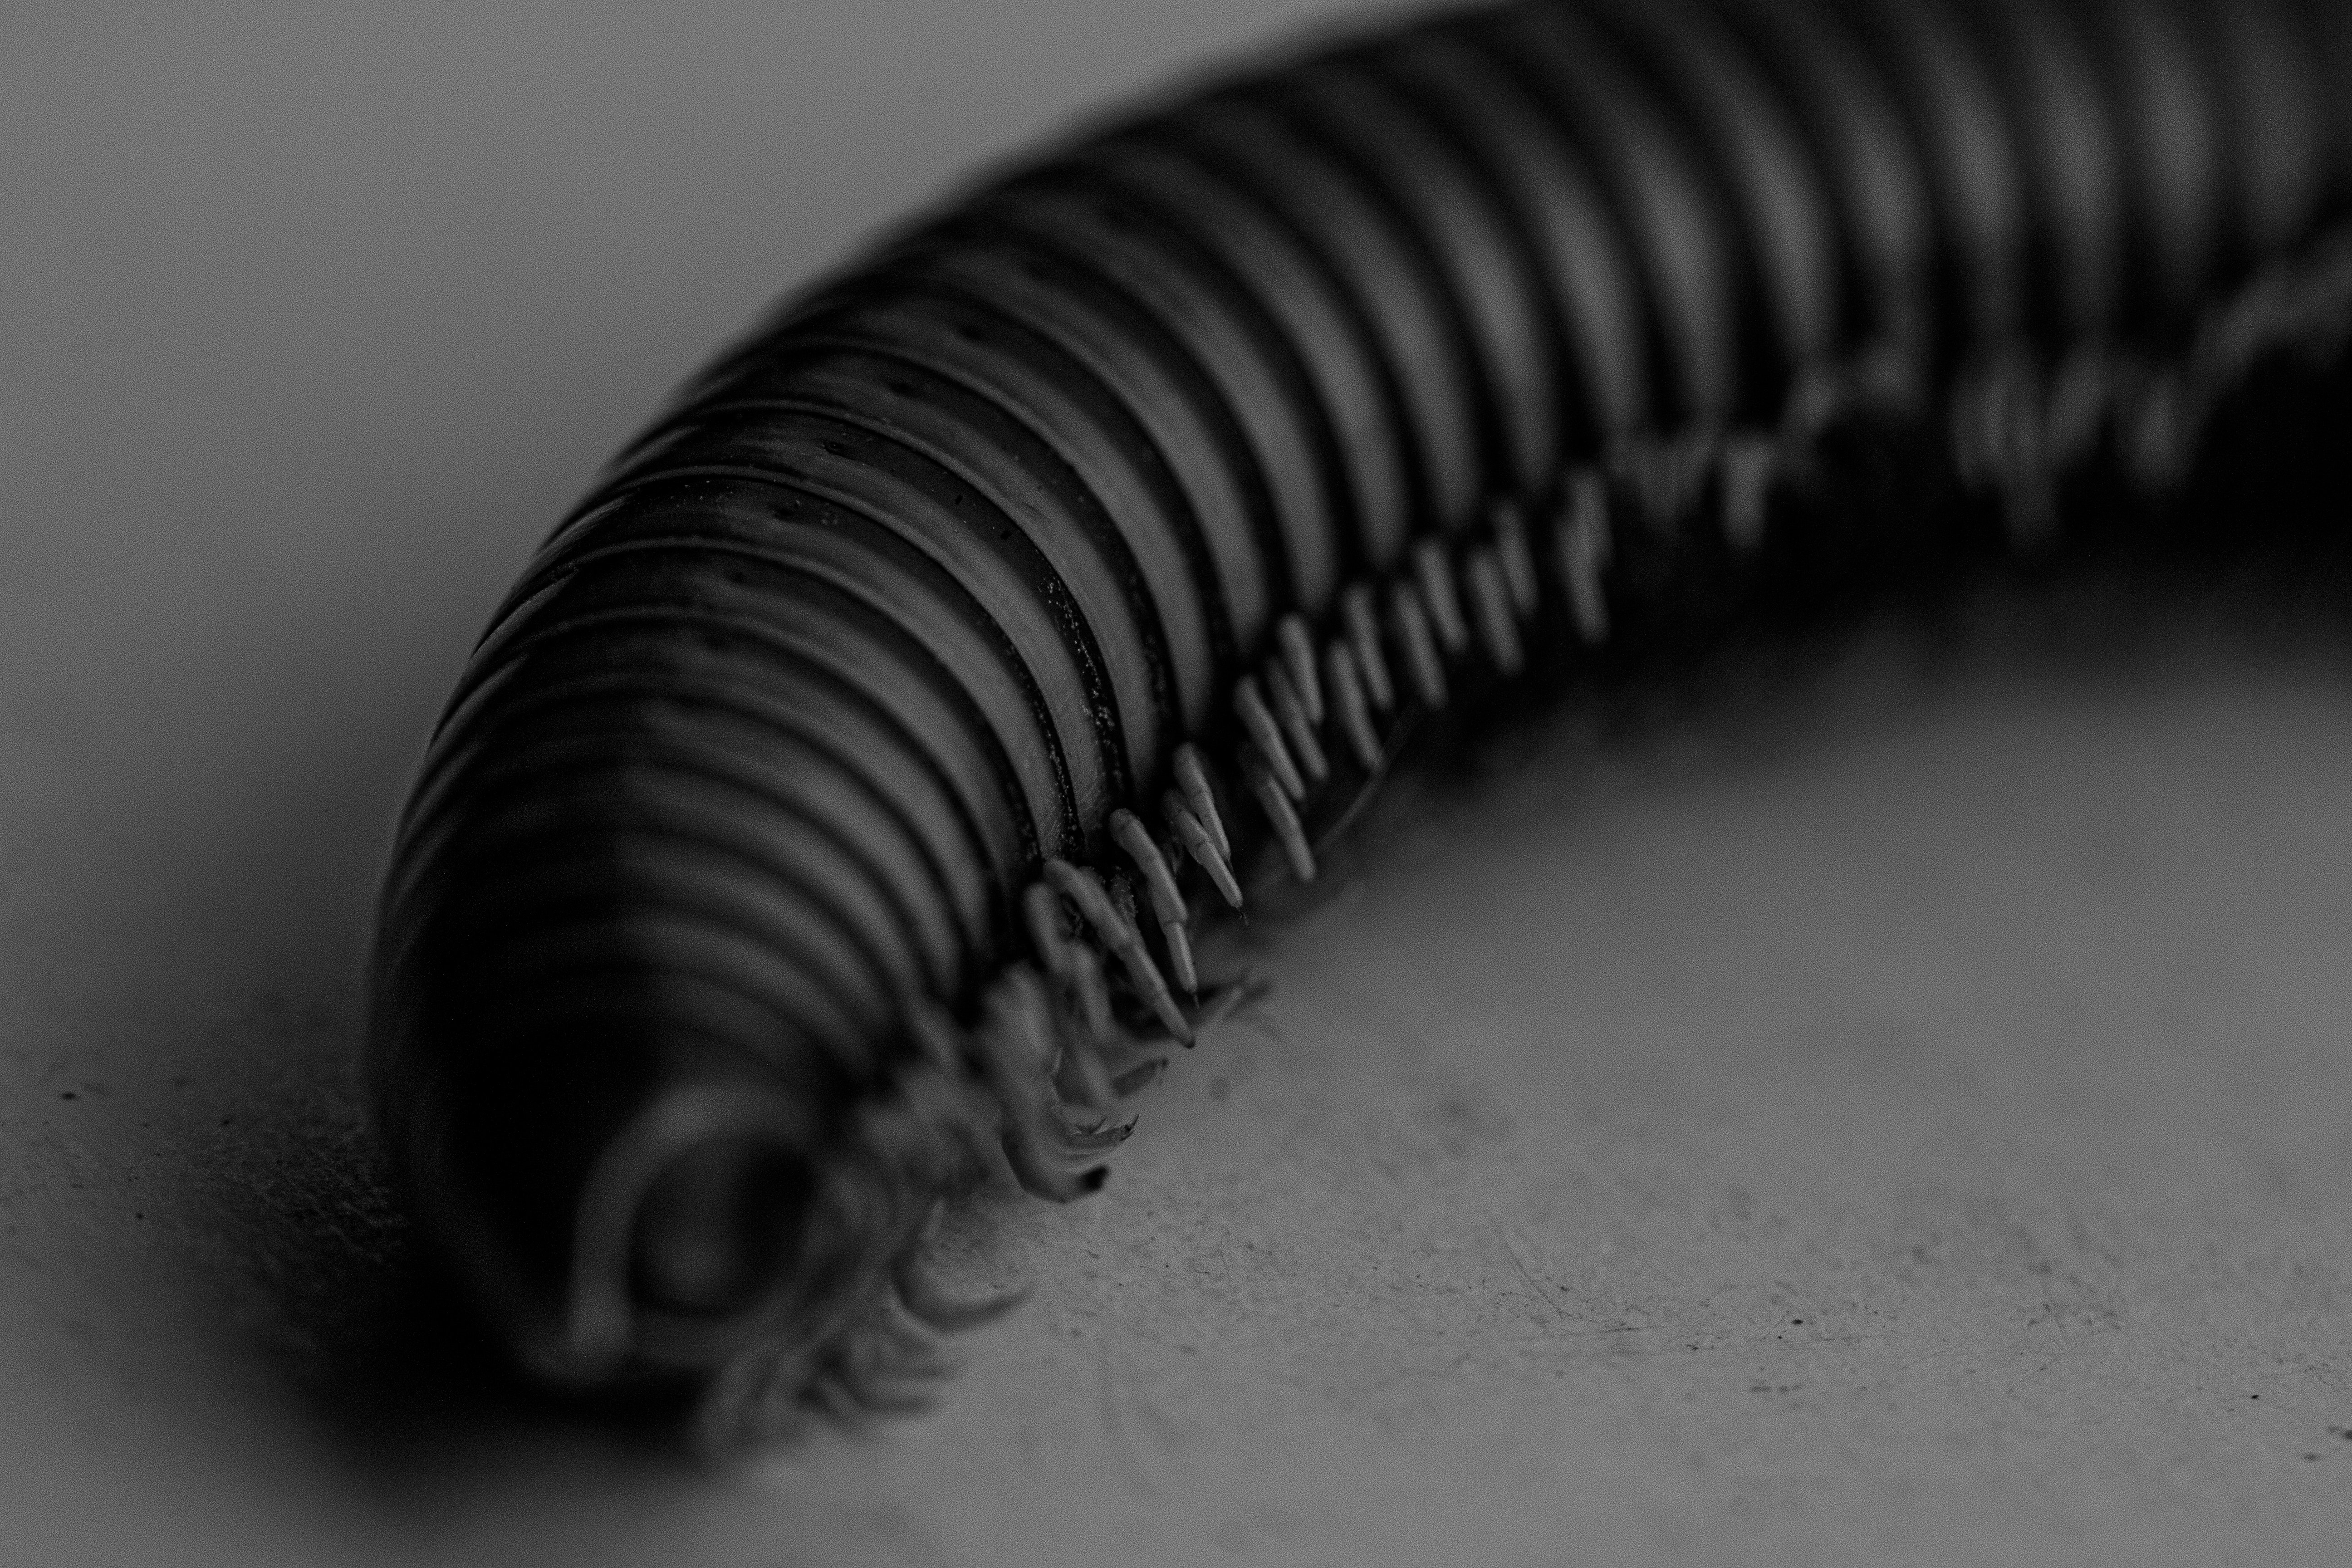 Centipede Spiritual Symbolism And Meaning